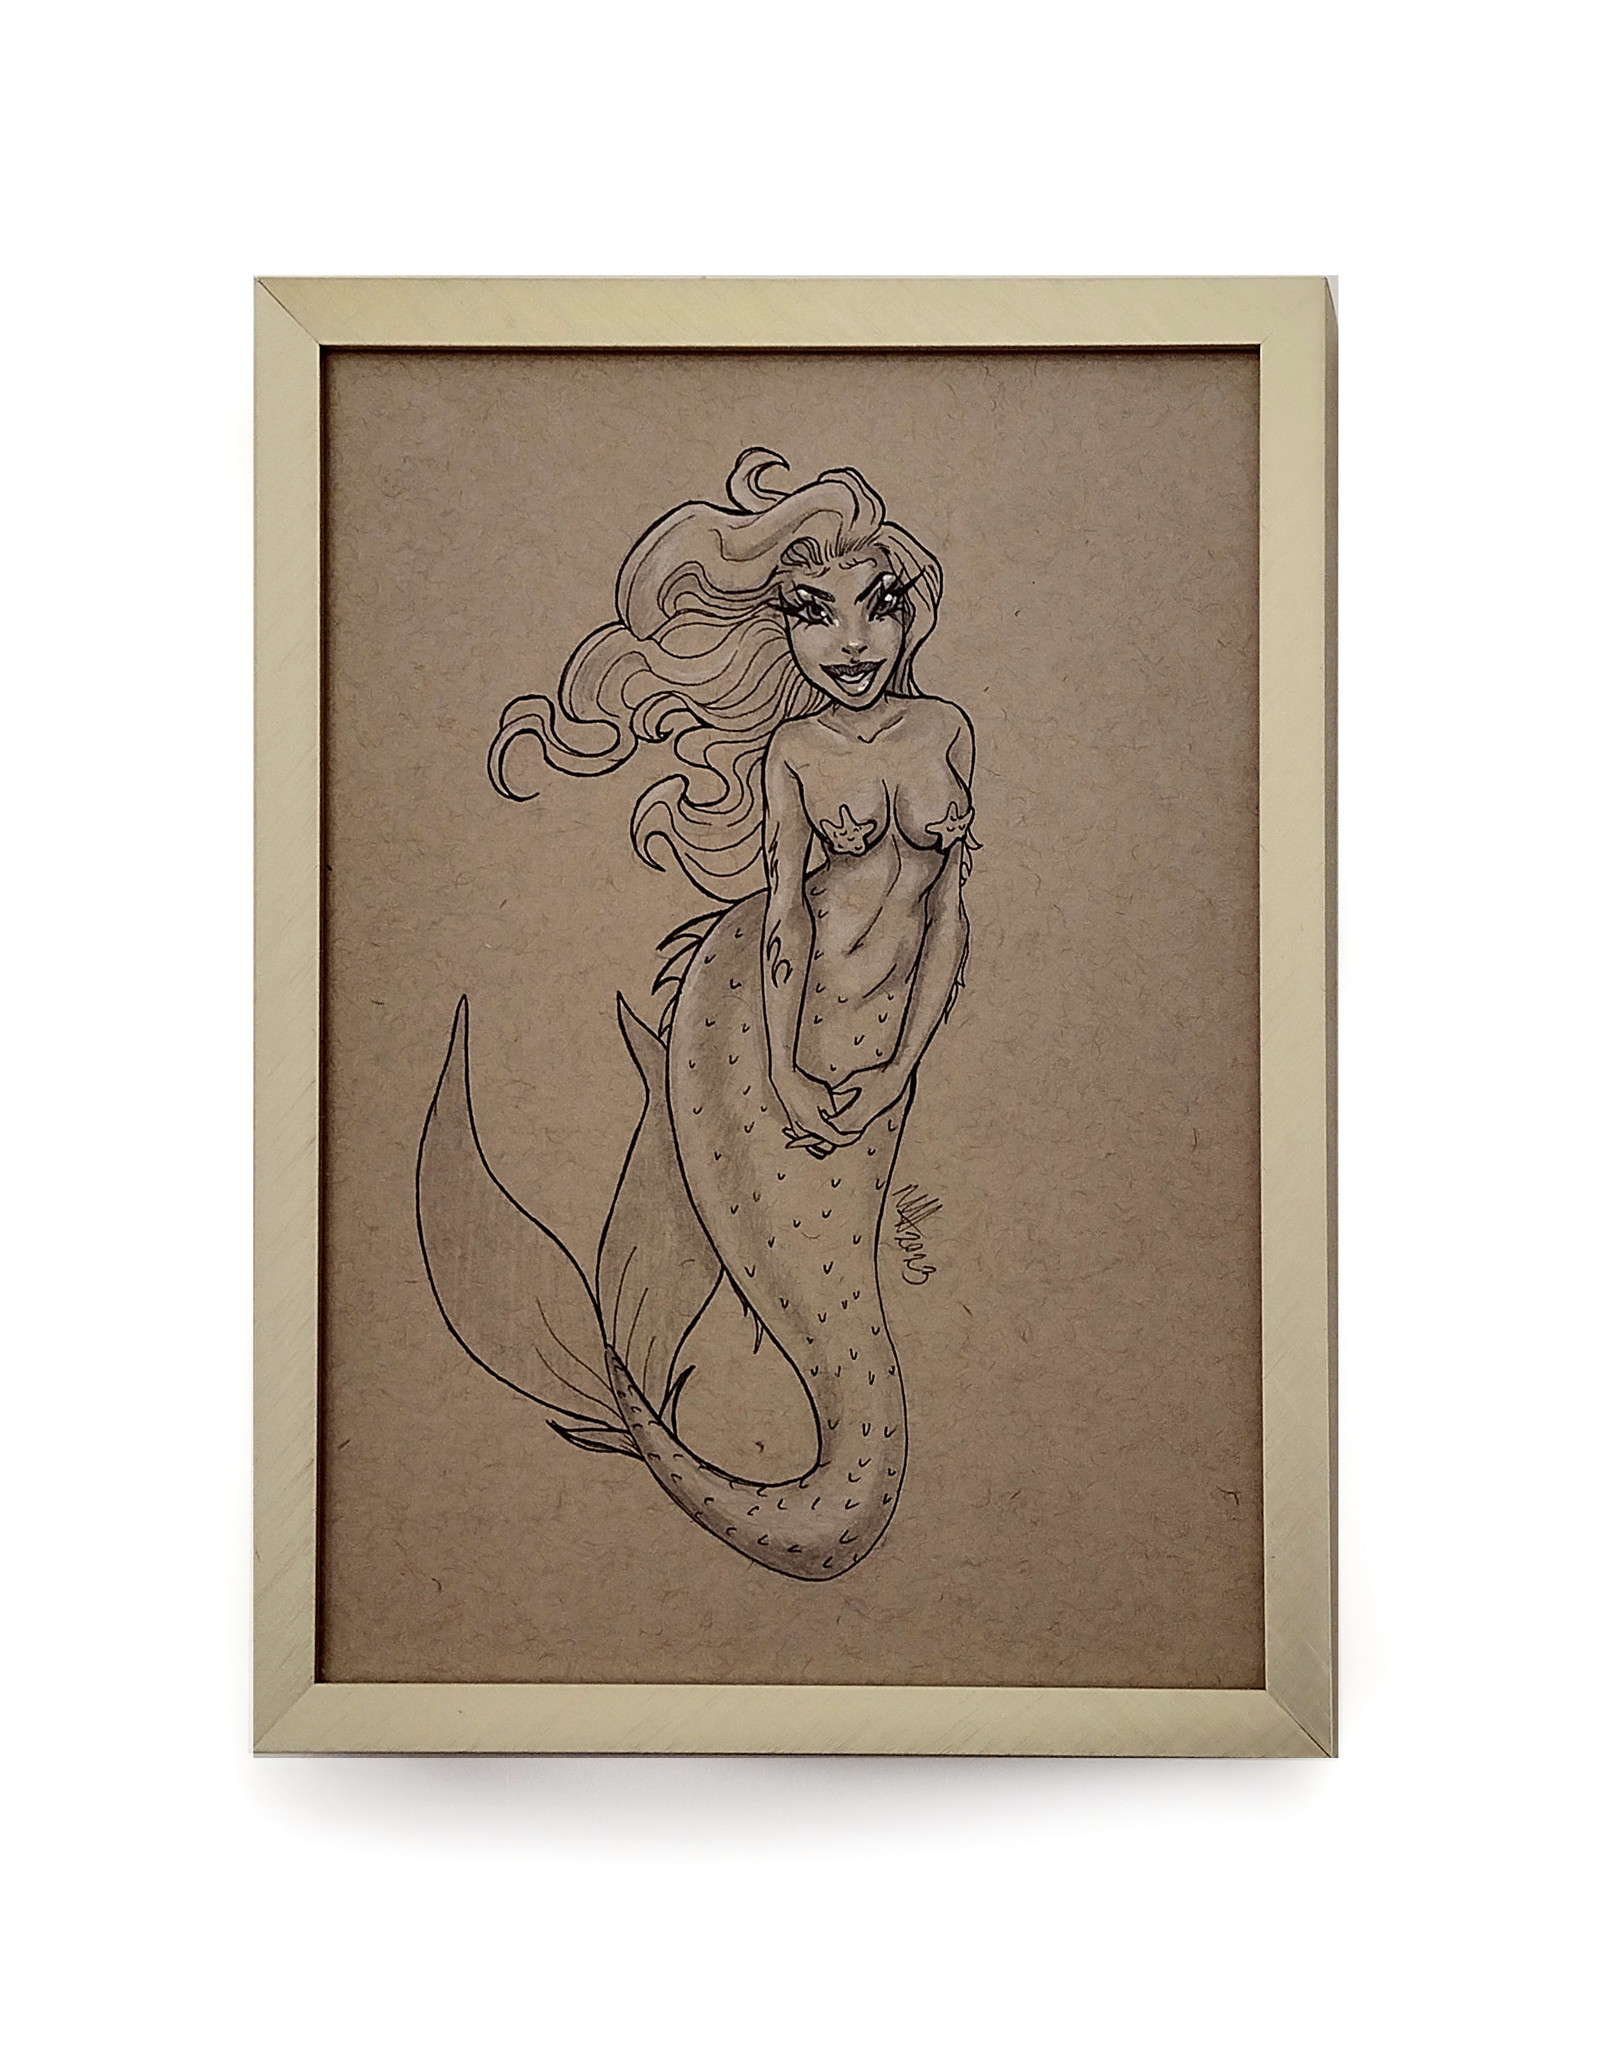 Morgan Illustrates "Graphite Mermaid" by Morgan Illustrates